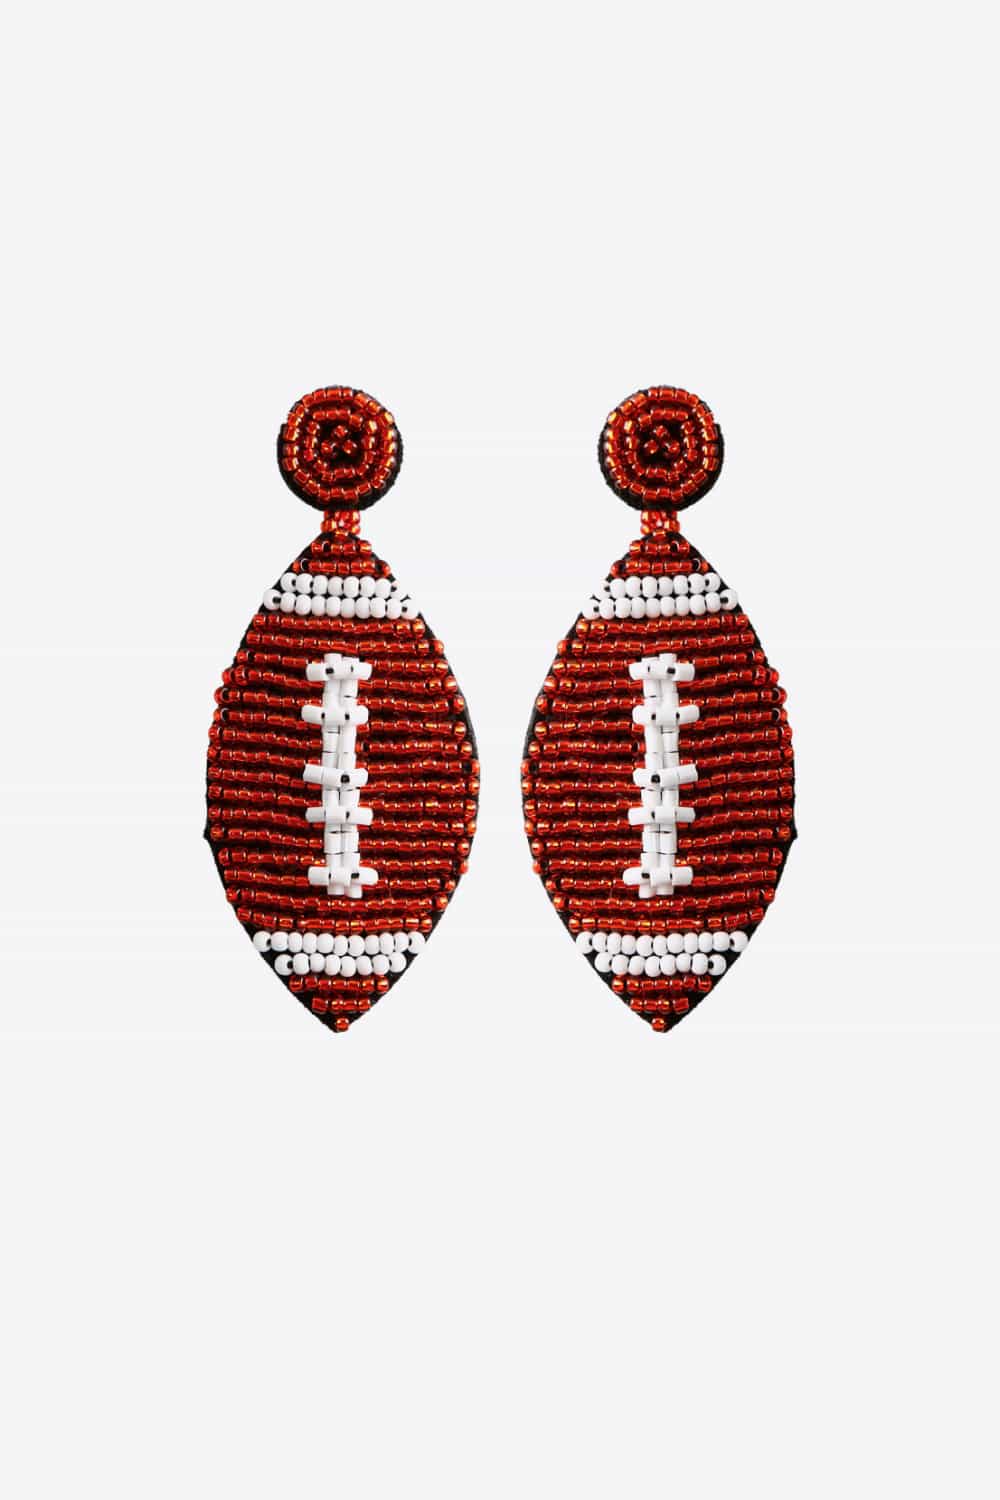 Football bead Earrings